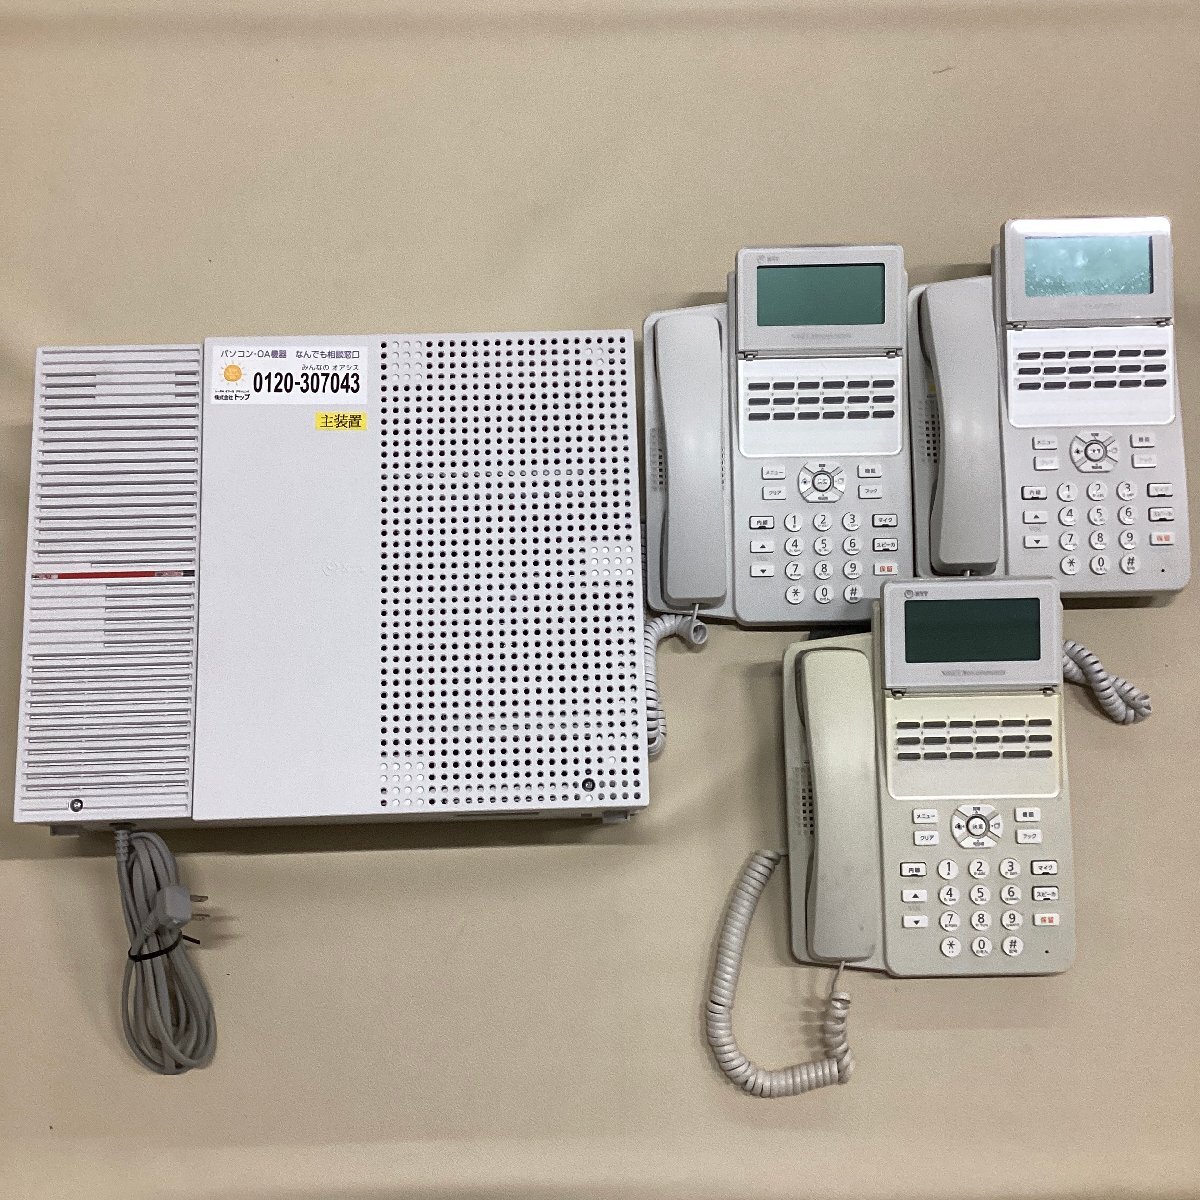 *NTT Восточная Япония телефон продажа комплектом . оборудование N1S-ME-(E1) телефонный аппарат A1-(18)STEL-(2)(W) 3 шт. сообщение оборудование офис . утиль 6.85kg*